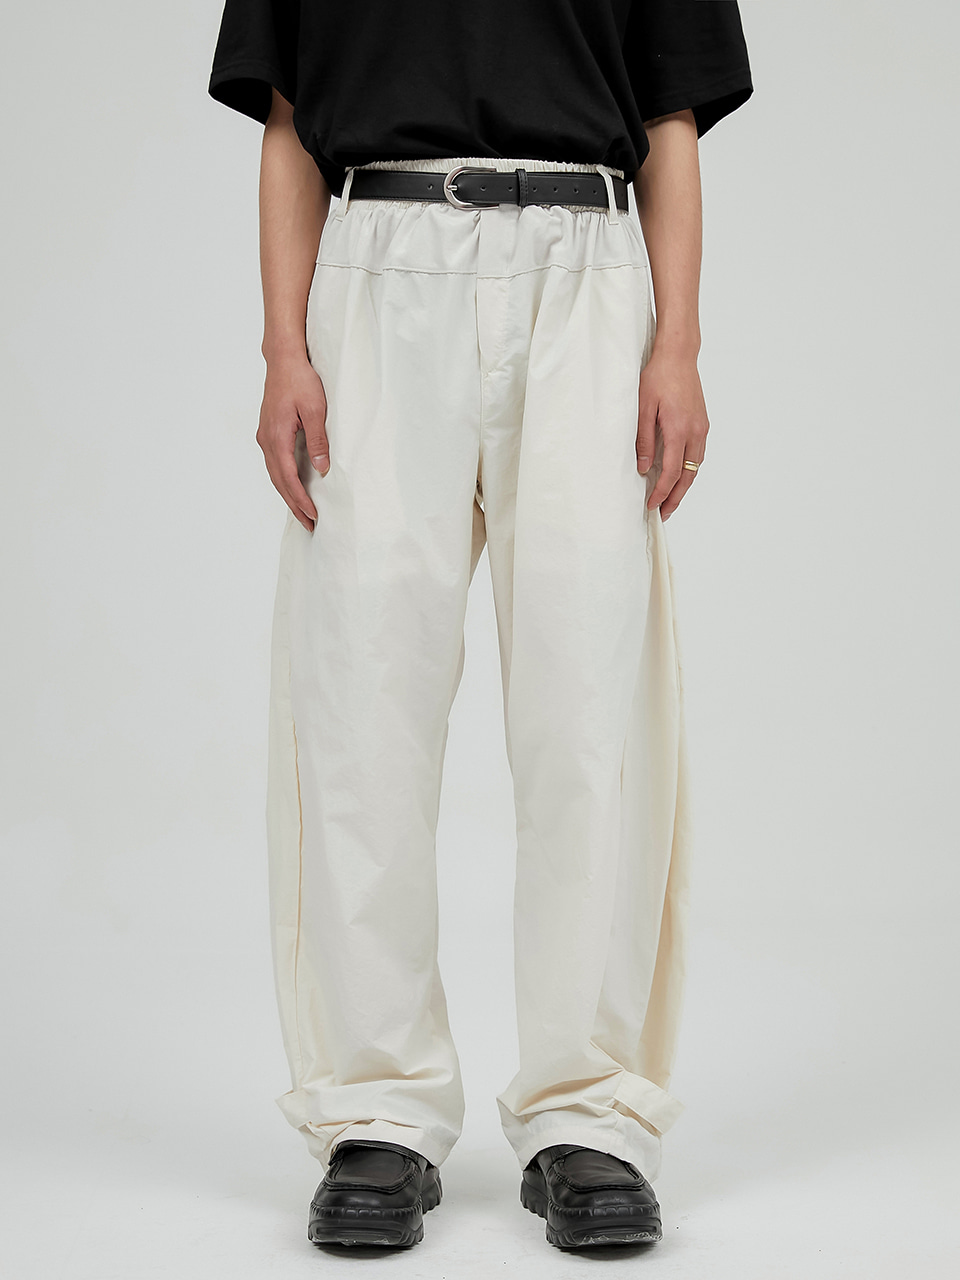 FLARE UP플레어업 Wide Split Pants - Cream (FL-218)